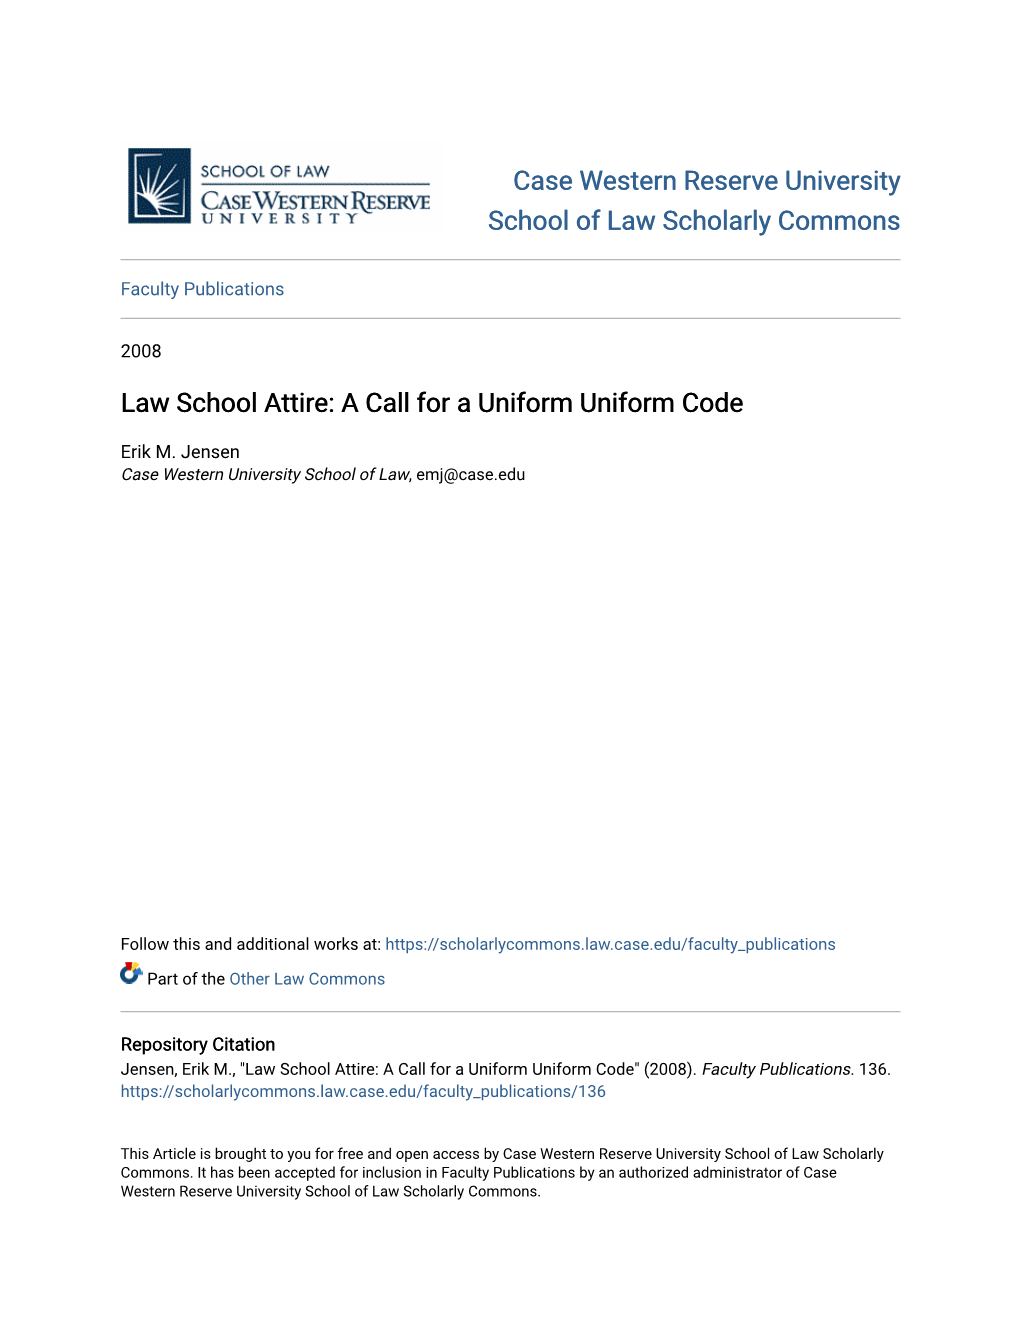 Law School Attire: a Call for a Uniform Uniform Code